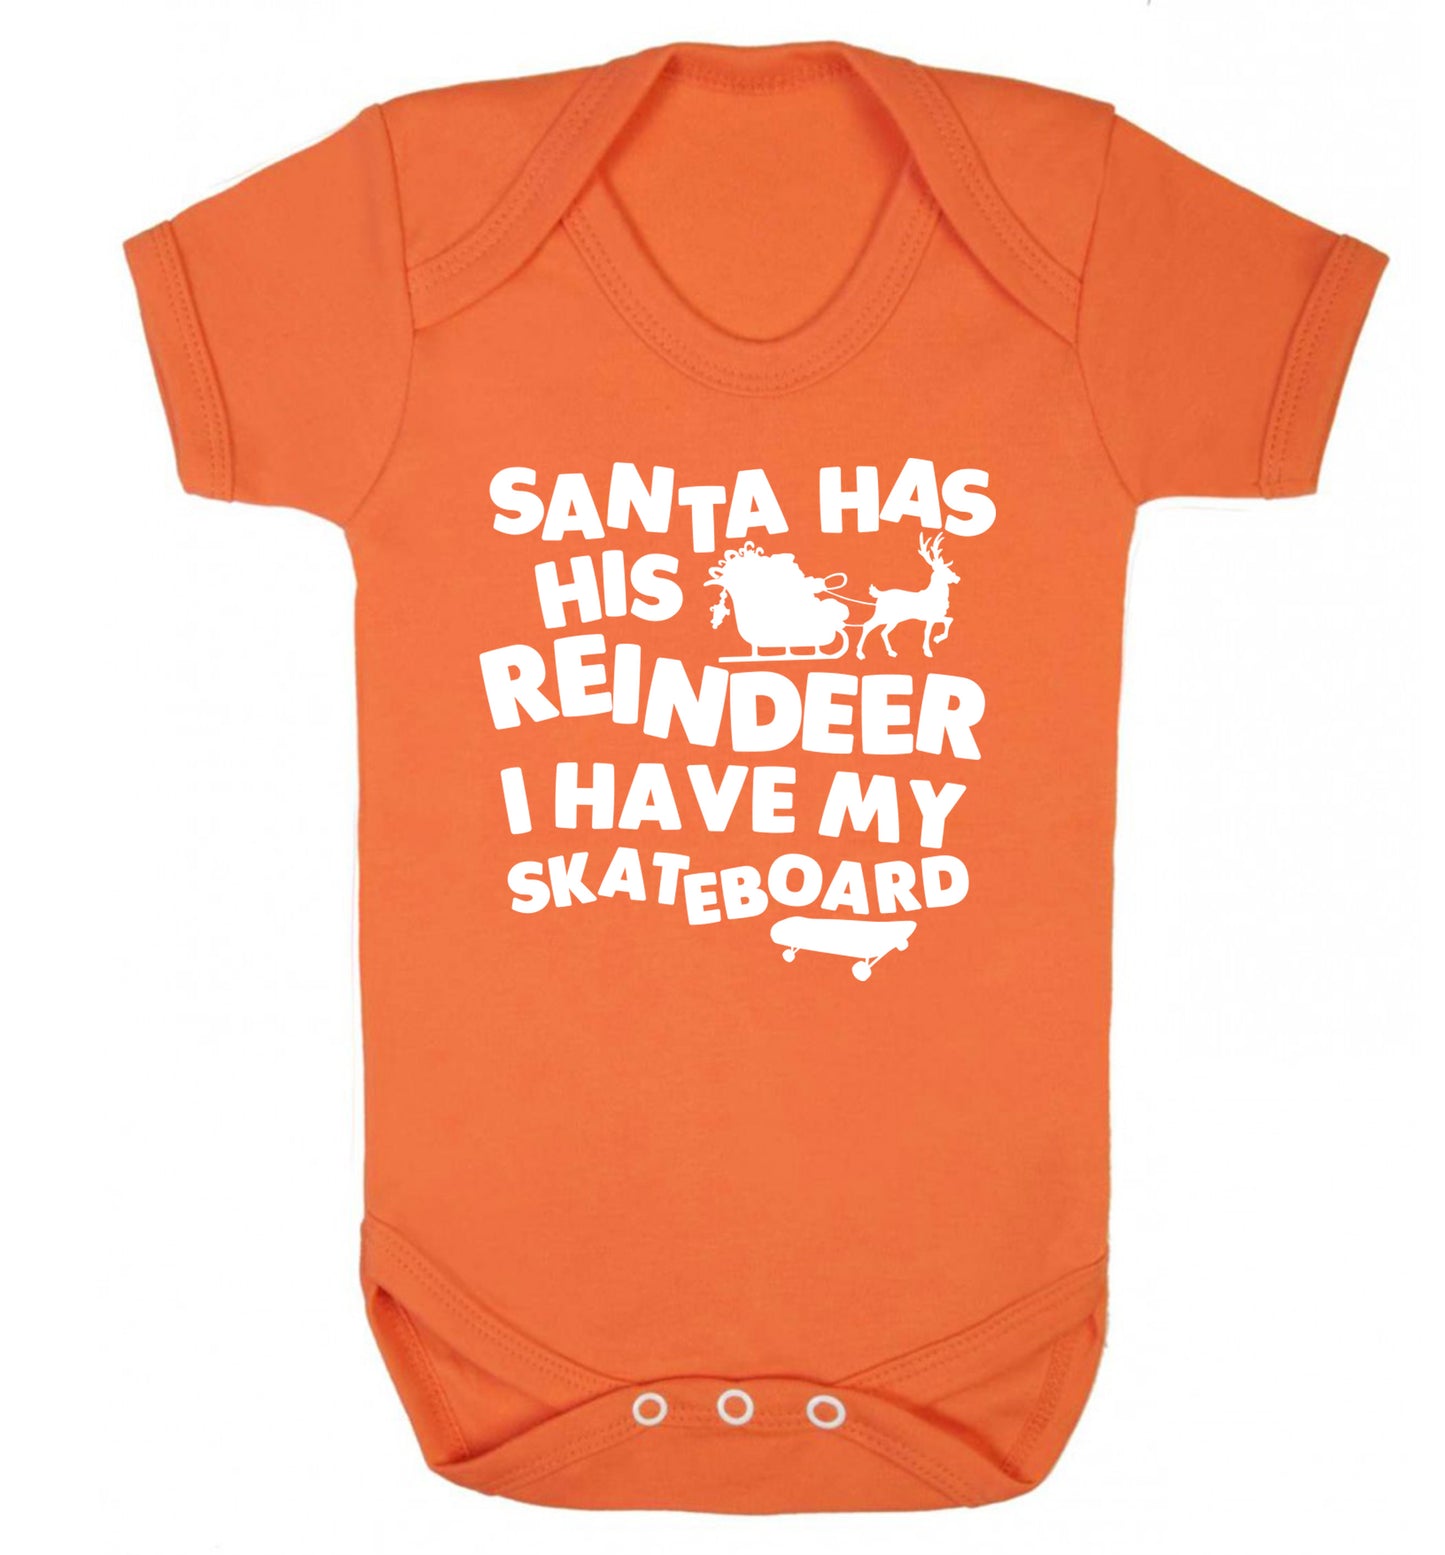 Santa has his reindeer I have my skateboard Baby Vest orange 18-24 months